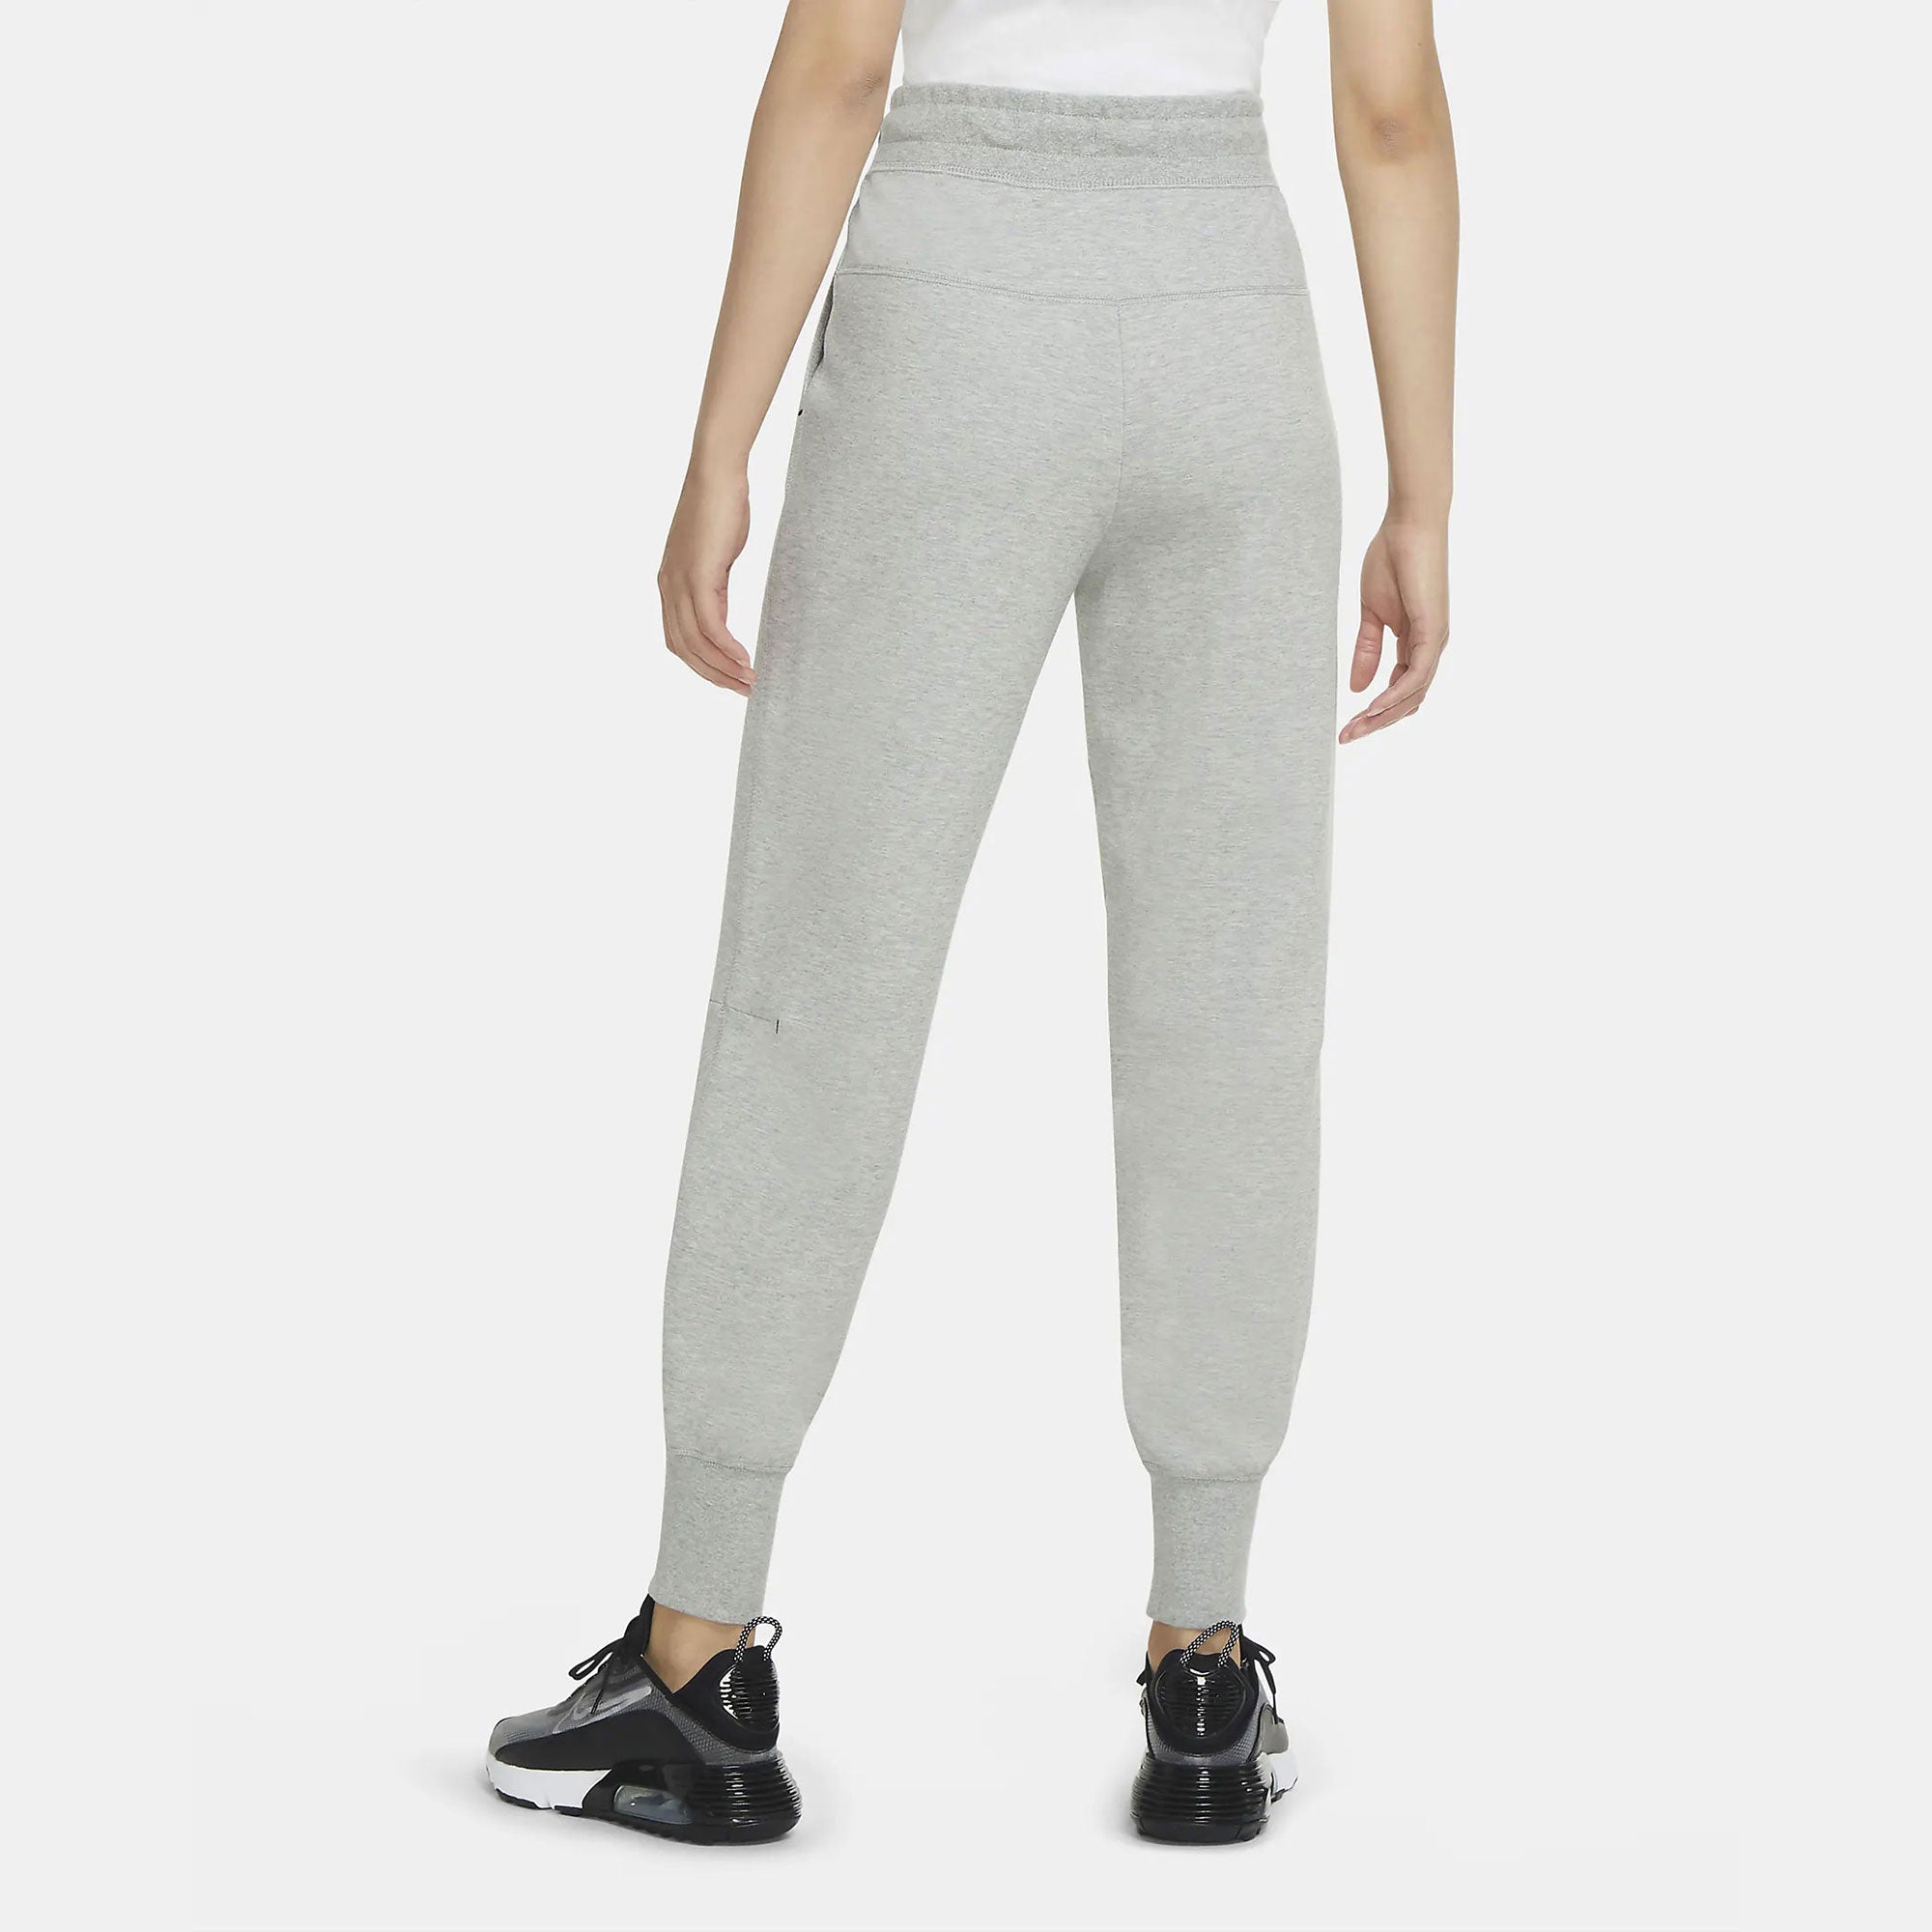 Nike Tech Fleece Women's Pants Grey (2)